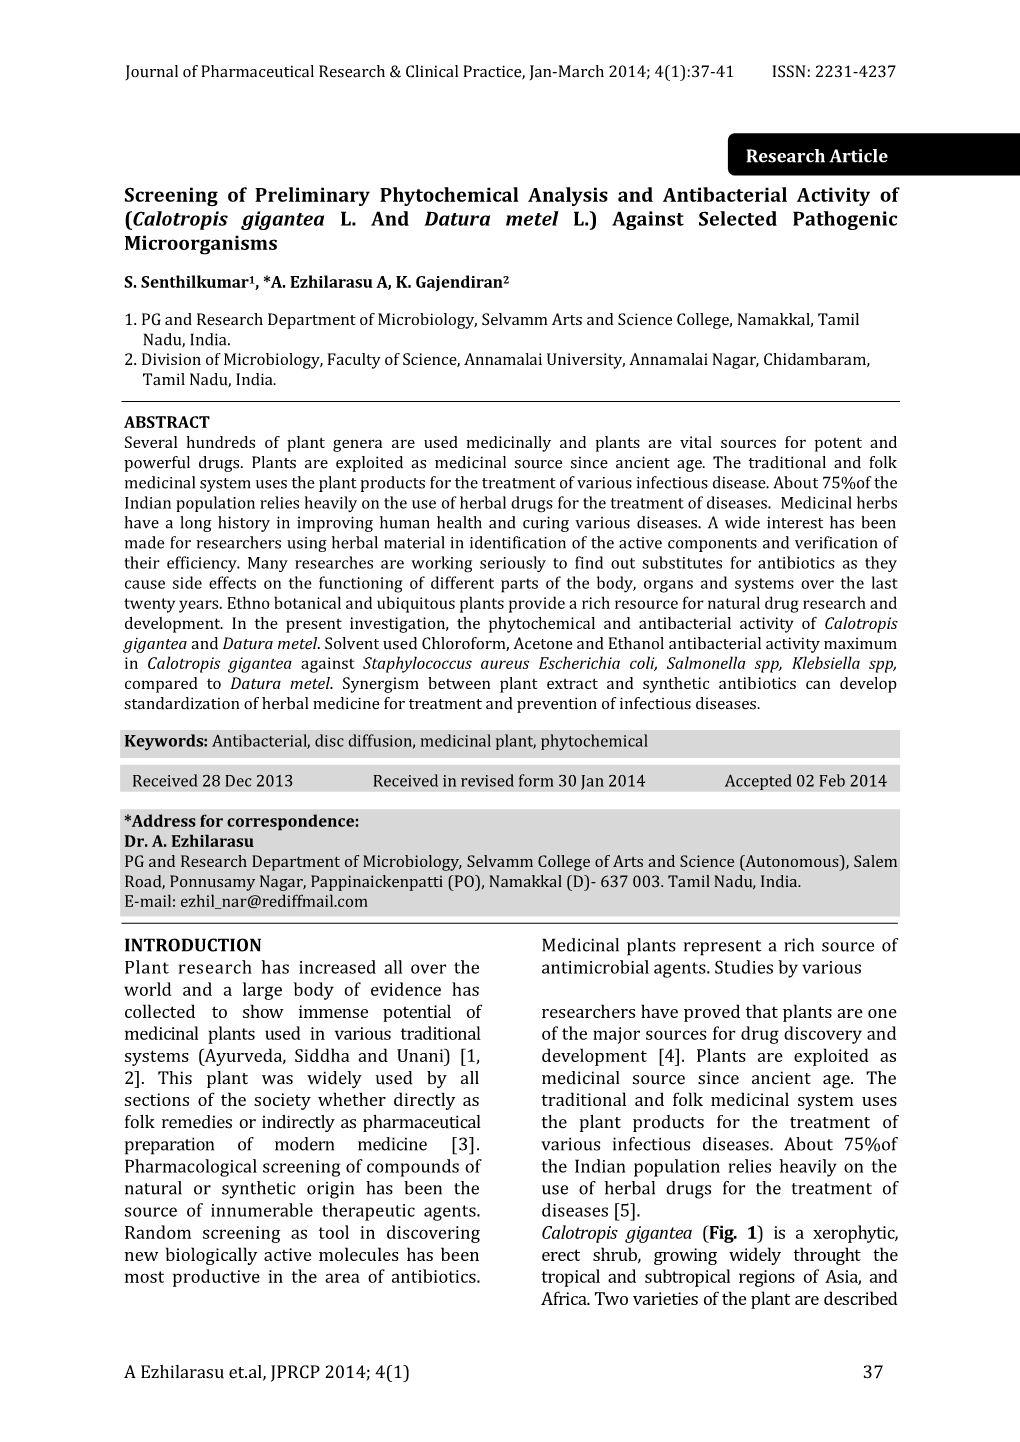 Screening of Preliminary Phytochemical Analysis and Antibacterial Activity of (Calotropis Gigantea L